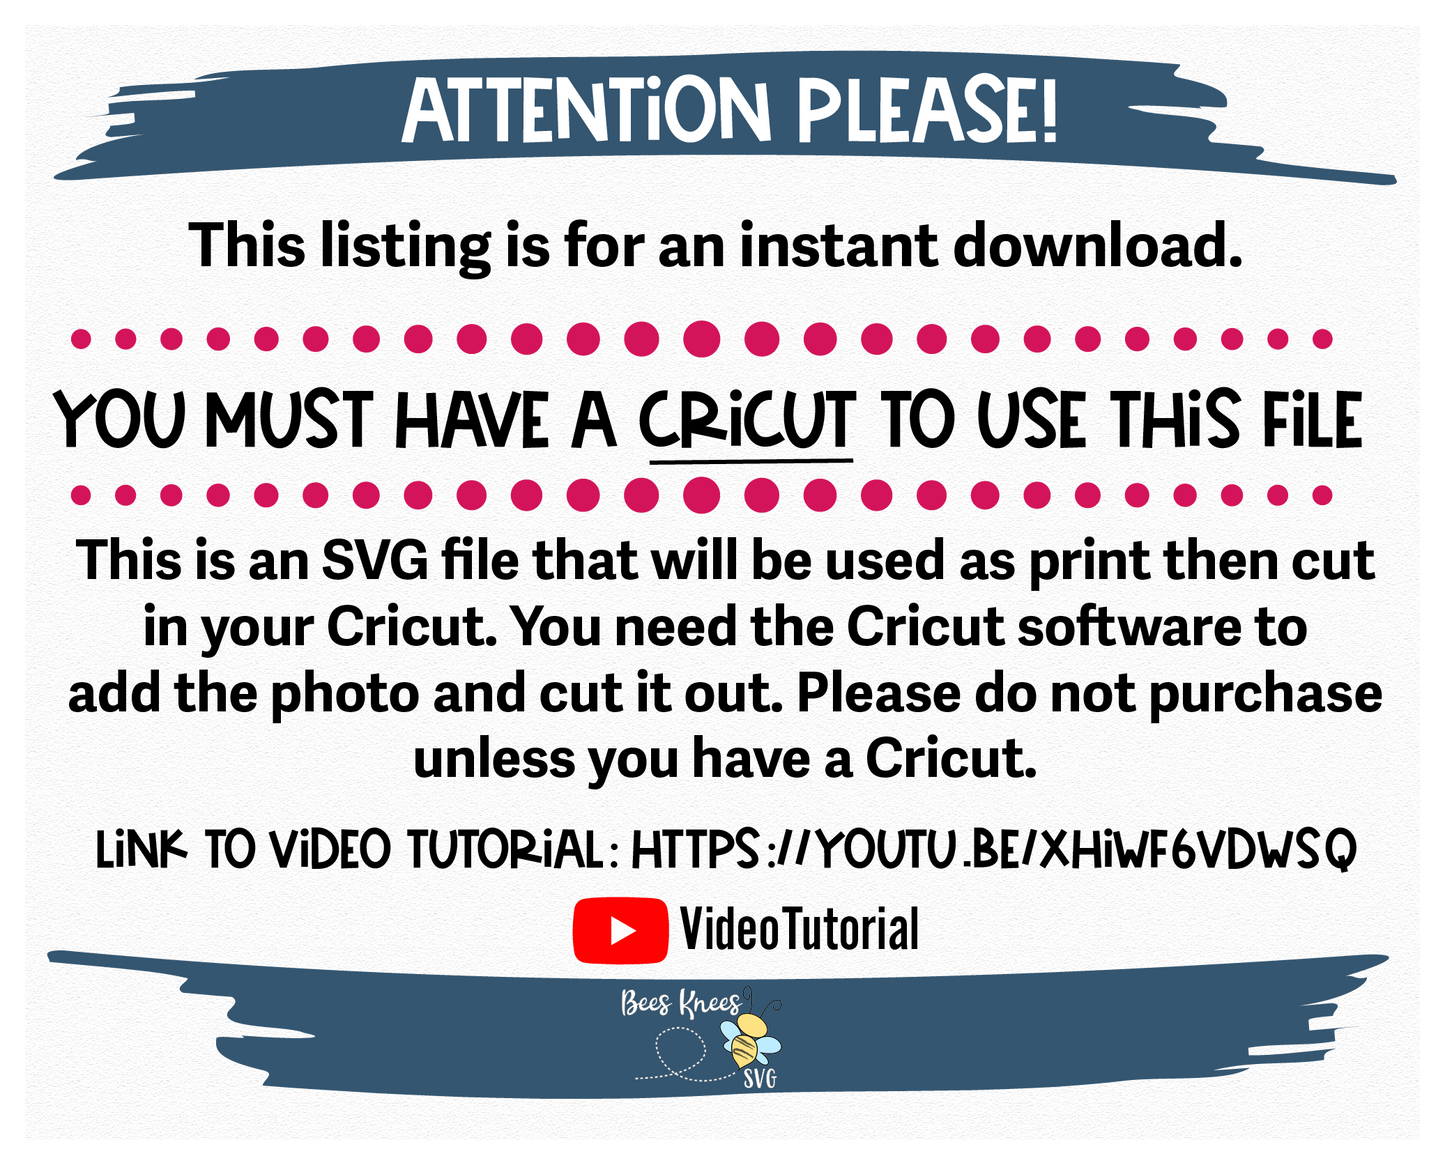 DIY Custom Printable Photo Elf Money Card SVG